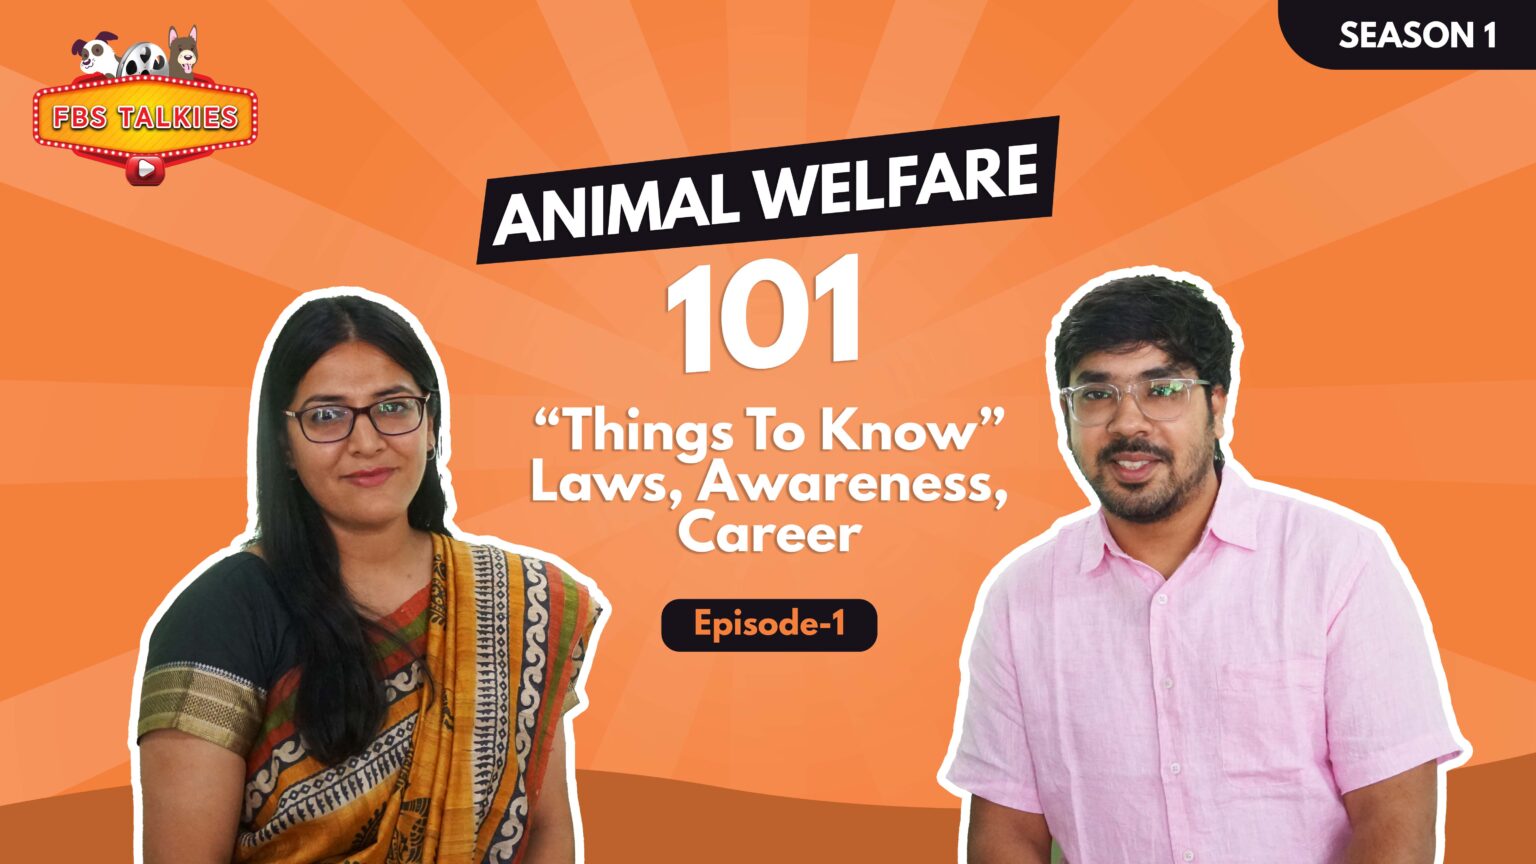 Podcast for animal welfare